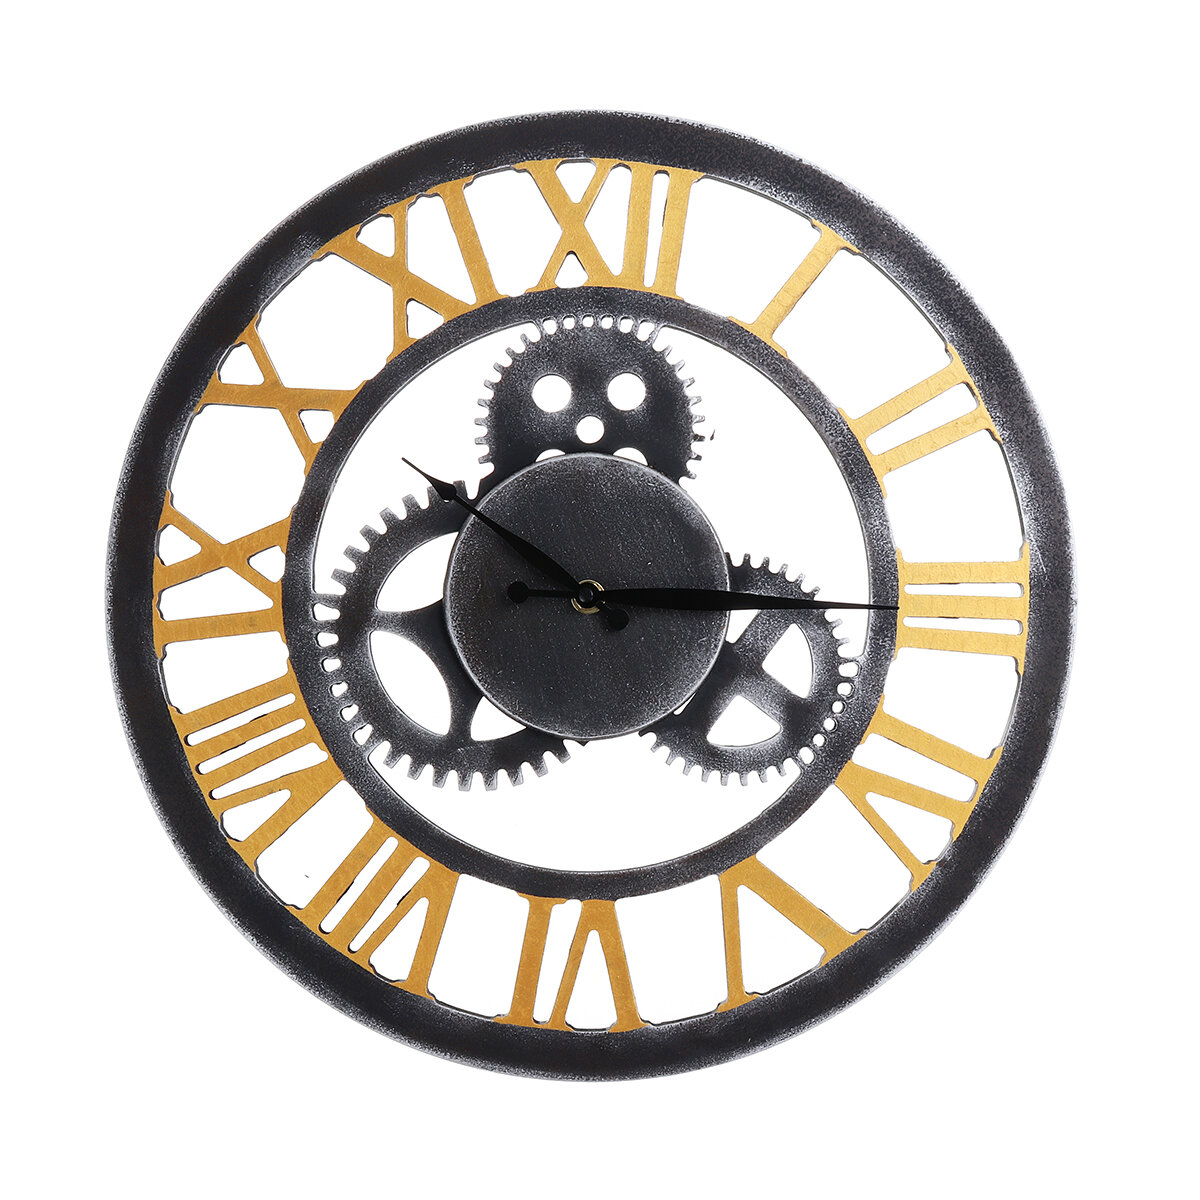 

Vintage Wooden Wall Clock Retro Gear Hanging Clock Roman Numeral Horologe European Style Clock Decoration